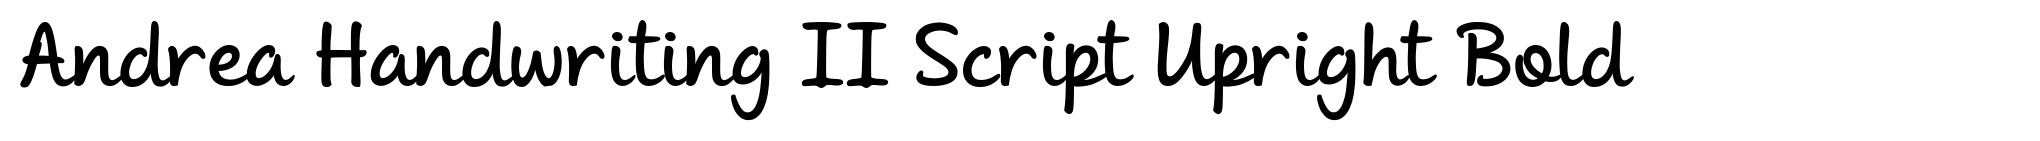 Andrea Handwriting II Script Upright Bold image